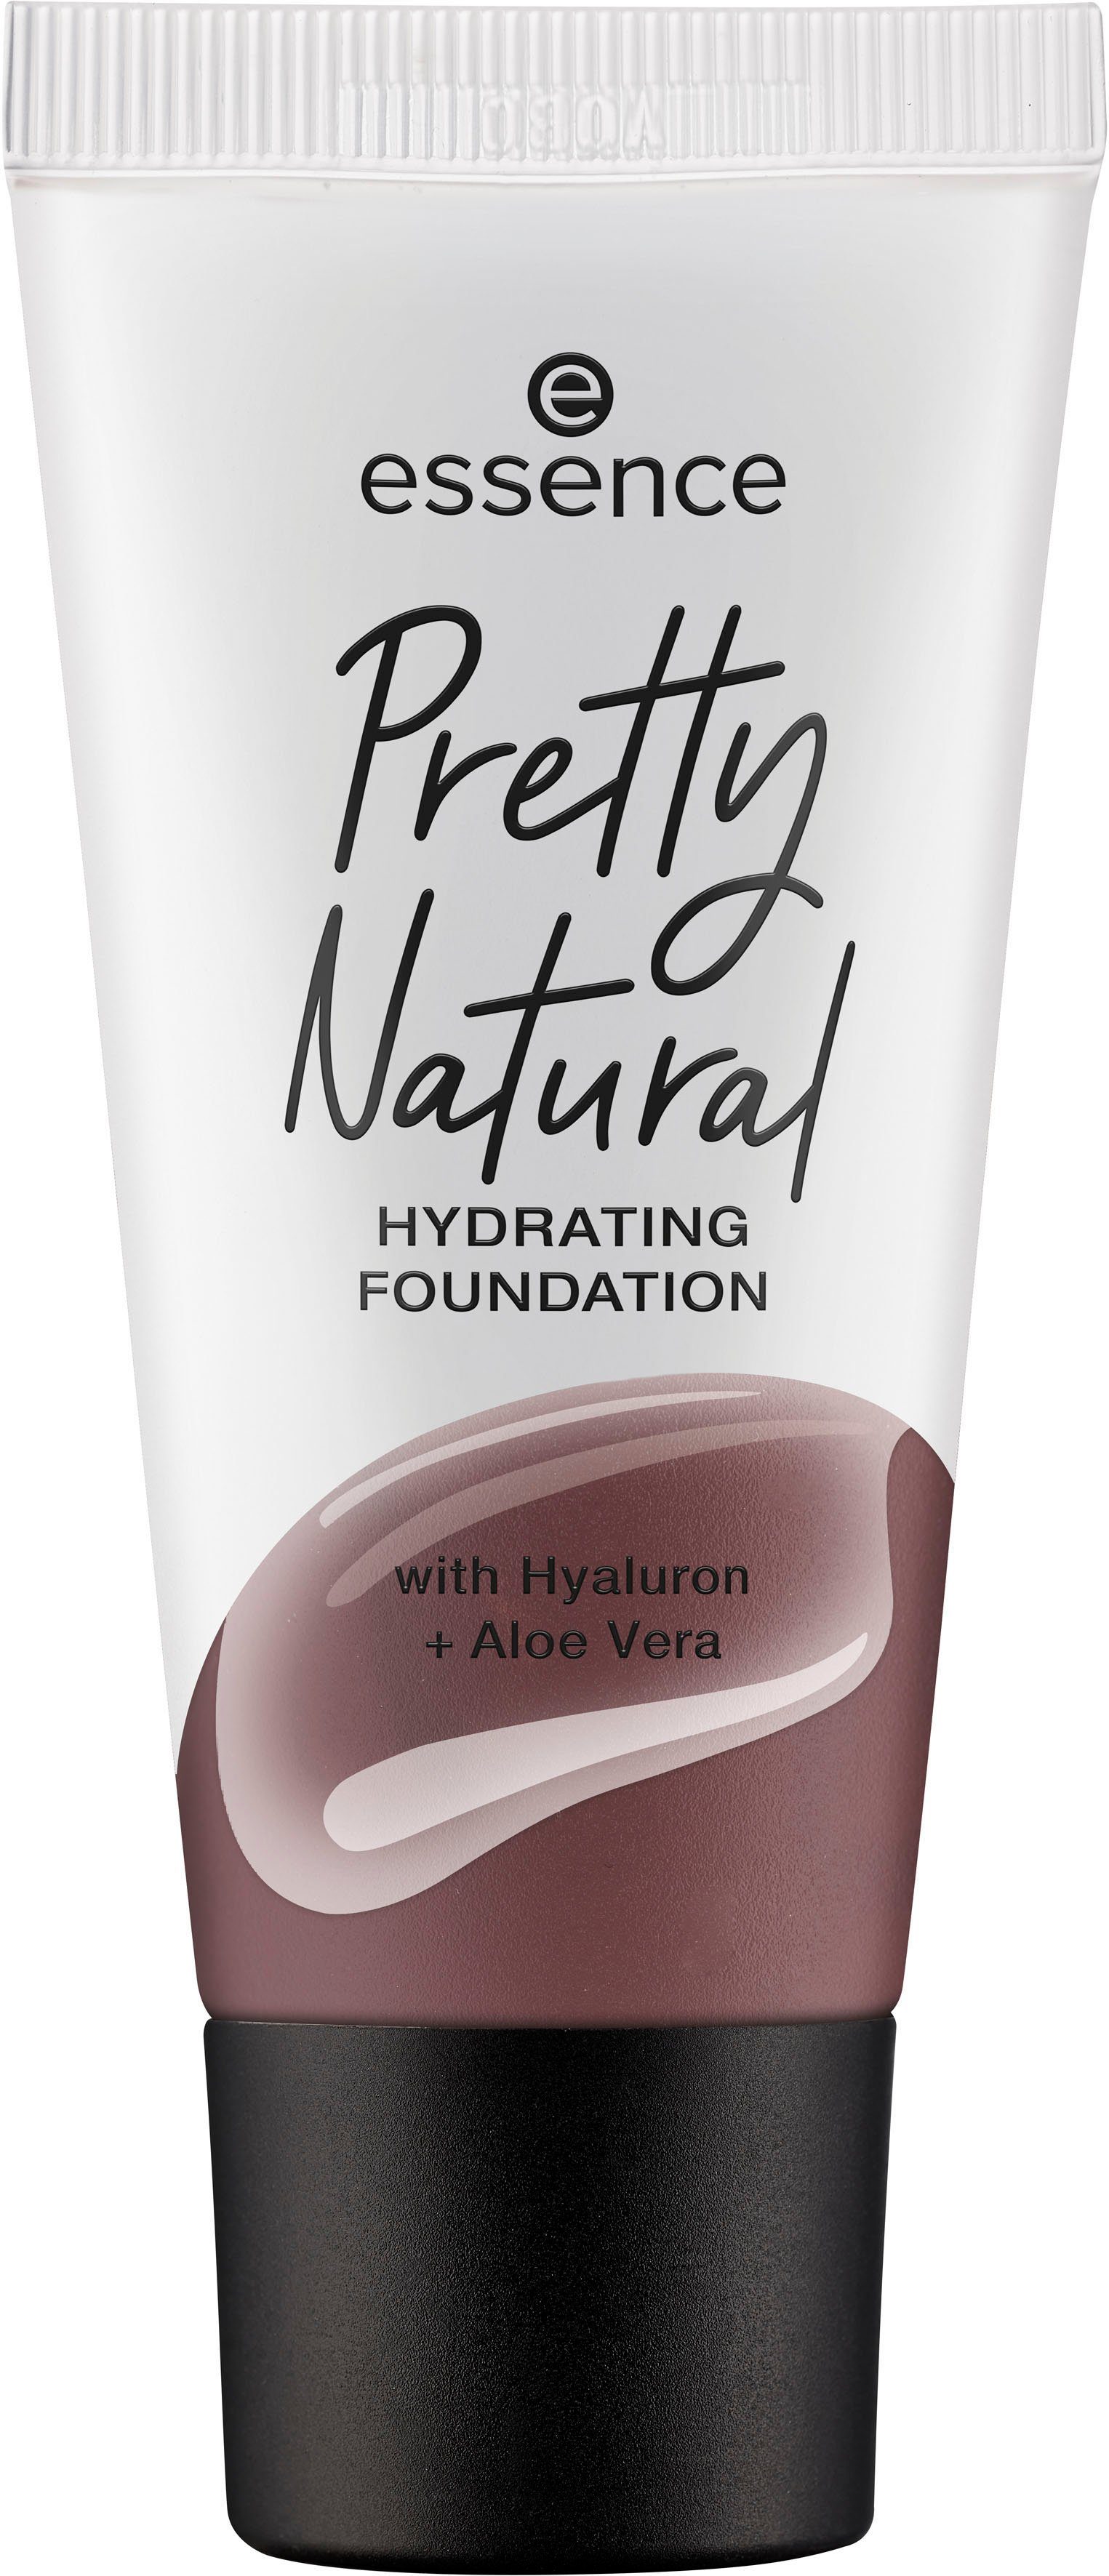 Essence Foundation HYDRATING, Chocolate 3-tlg. Pretty Neutral Natural